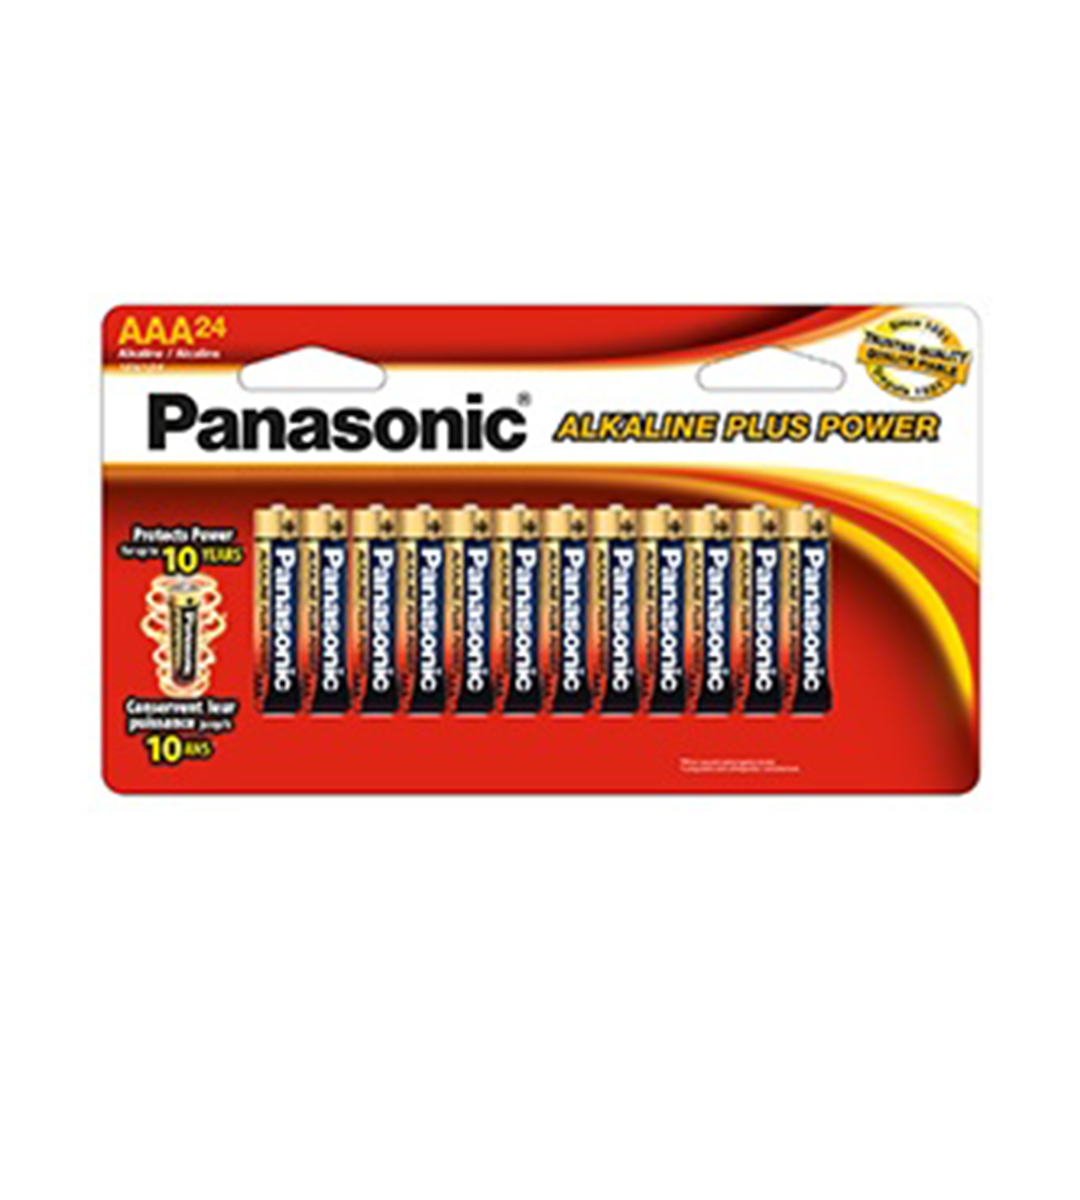 Panasonic AAA Alkaline Plus Power Battery, LR03PA/24B (24 Pack)